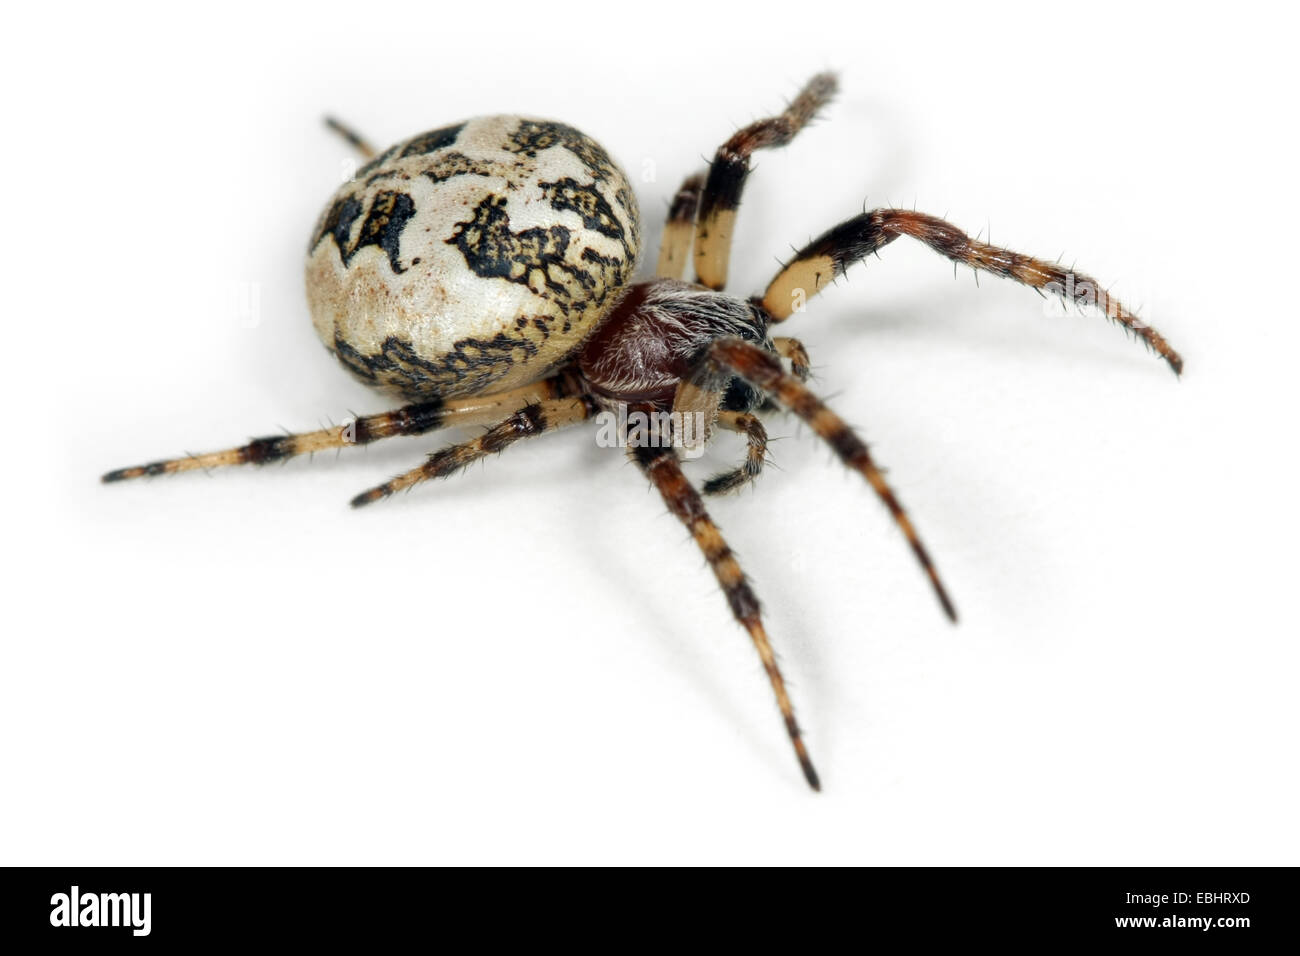 Un solco femmina Orbweaver (Larinioides cornutus) su sfondo bianco. Famiglia Araneidae, Orbweaving ragni. Foto Stock